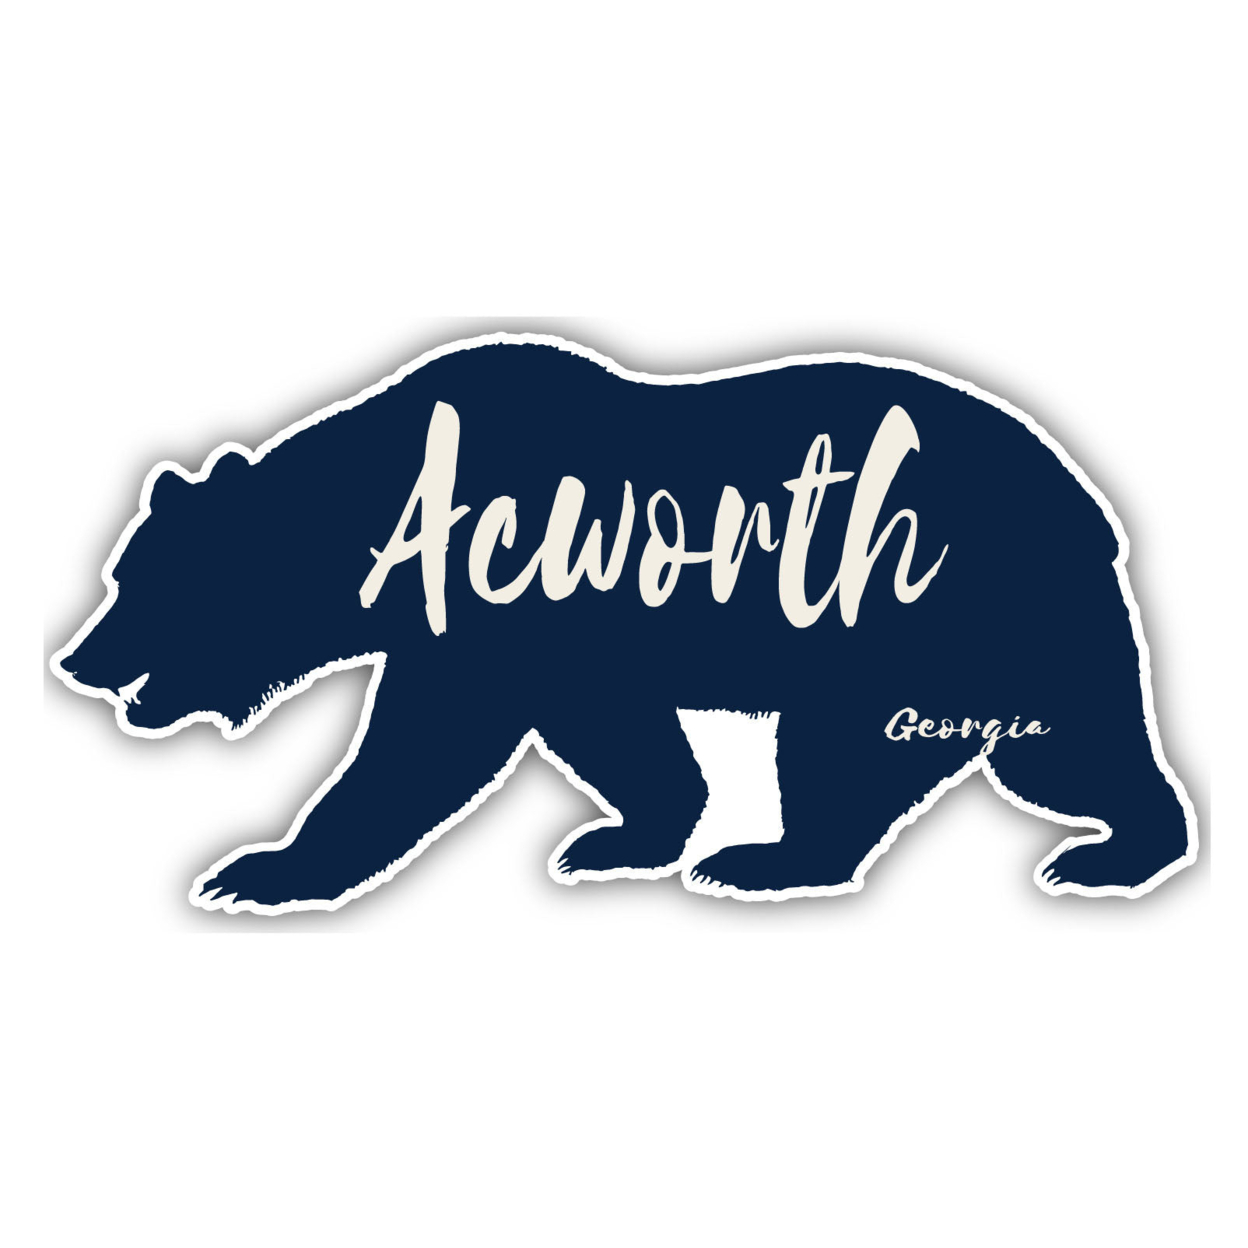 Acworth Georgia Souvenir Decorative Stickers (Choose Theme And Size) - Single Unit, 8-Inch, Great Outdoors